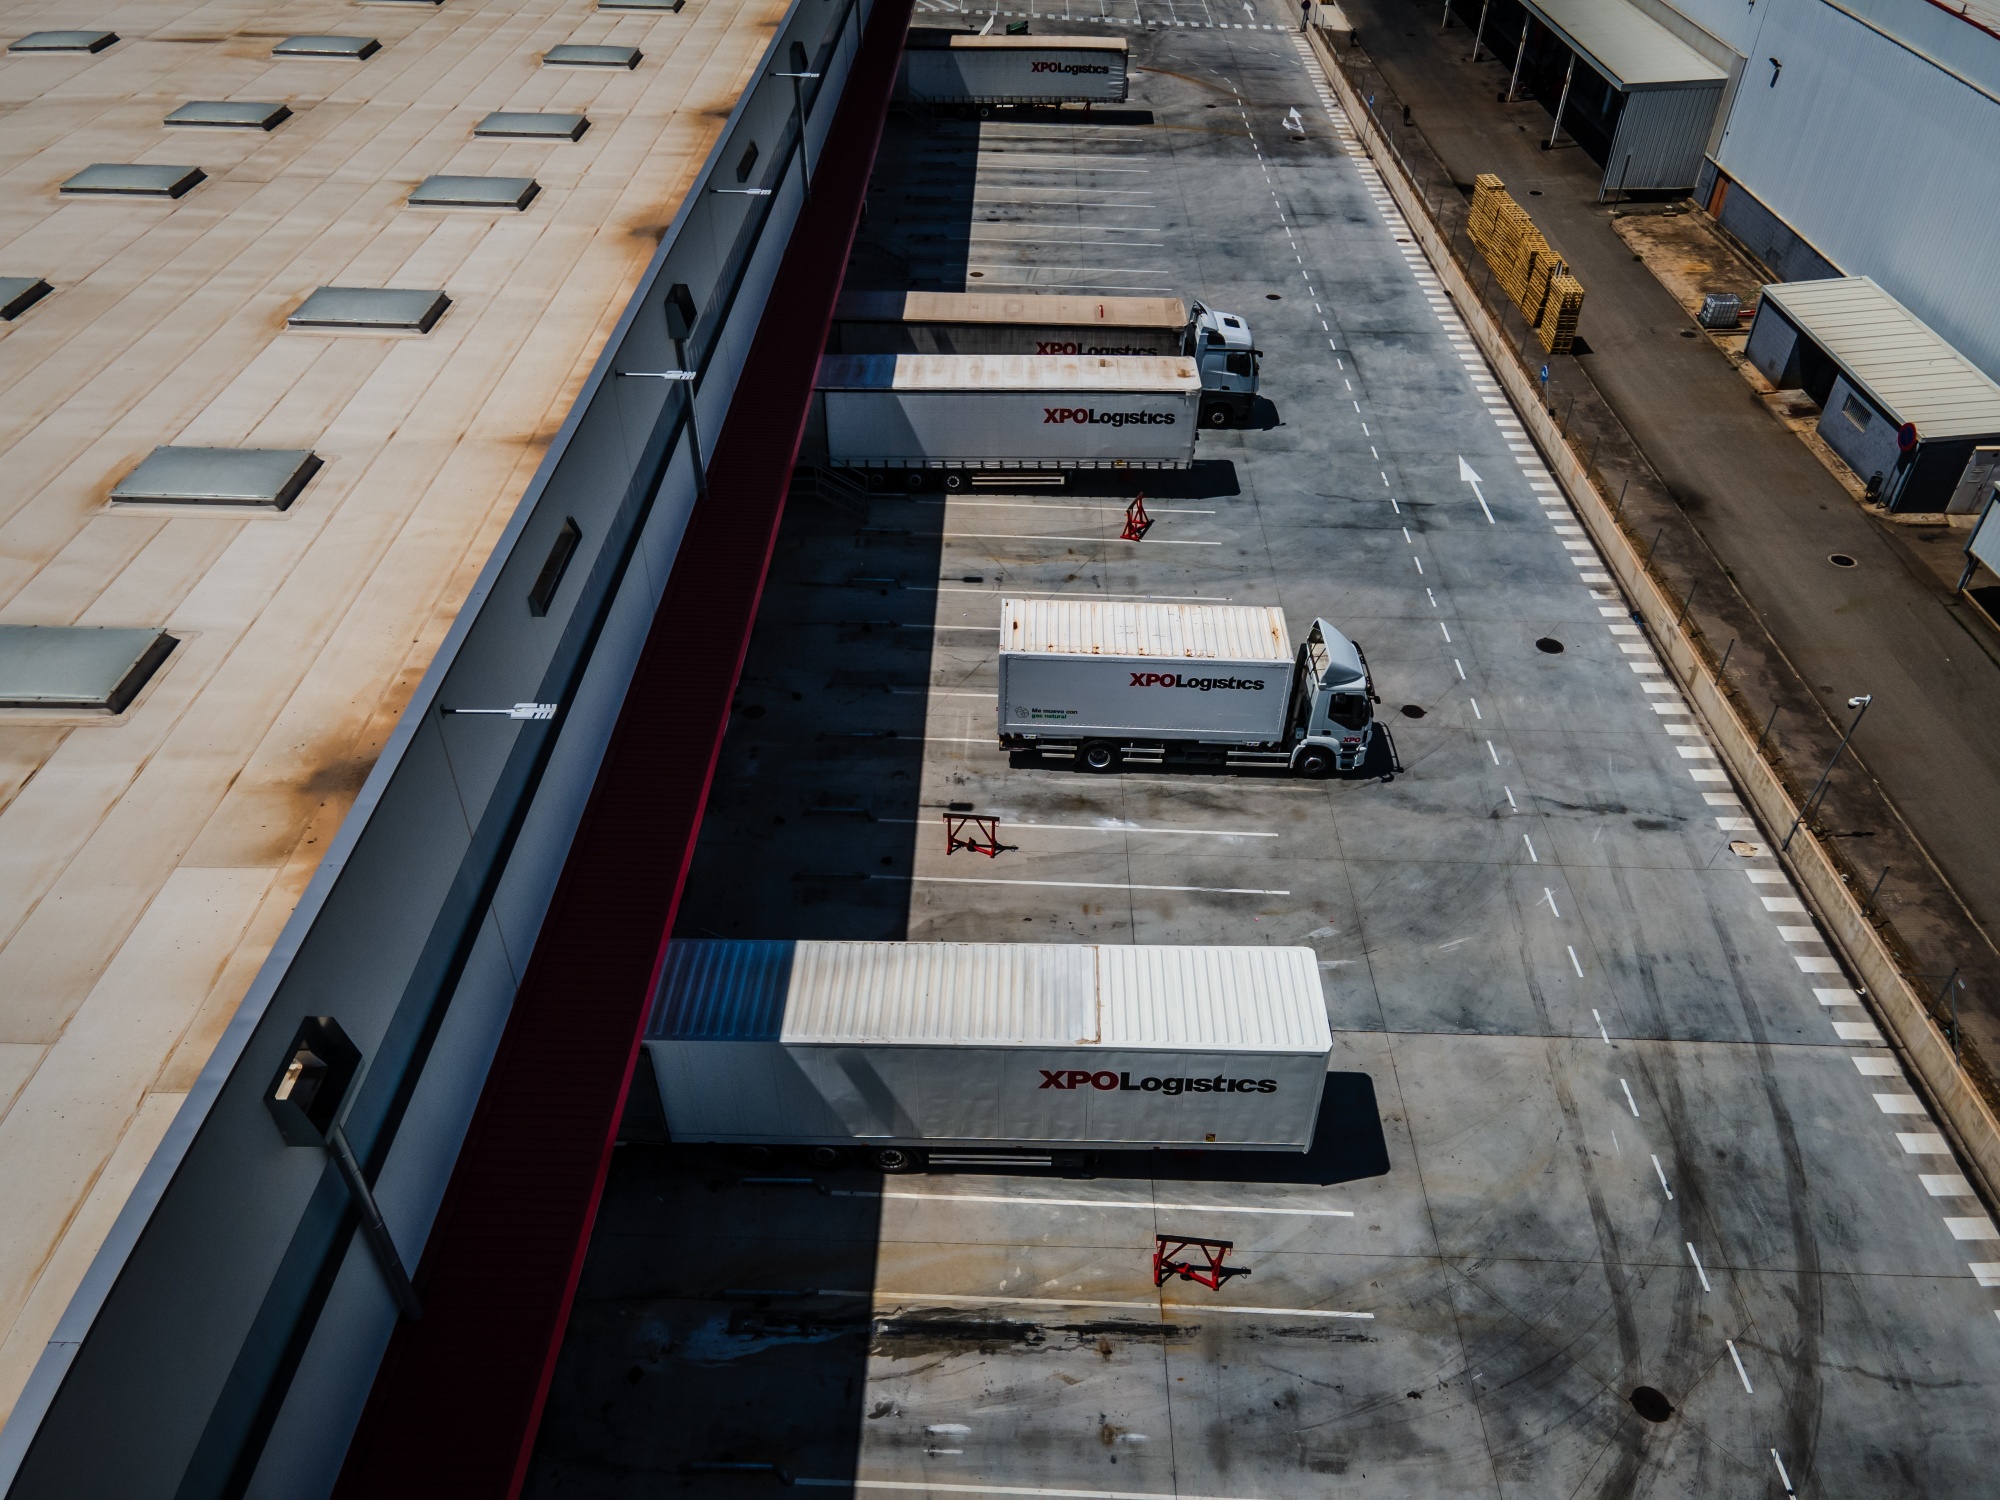 Laredo, Texas becomes No. 1 U.S. trade hub - FreightWaves